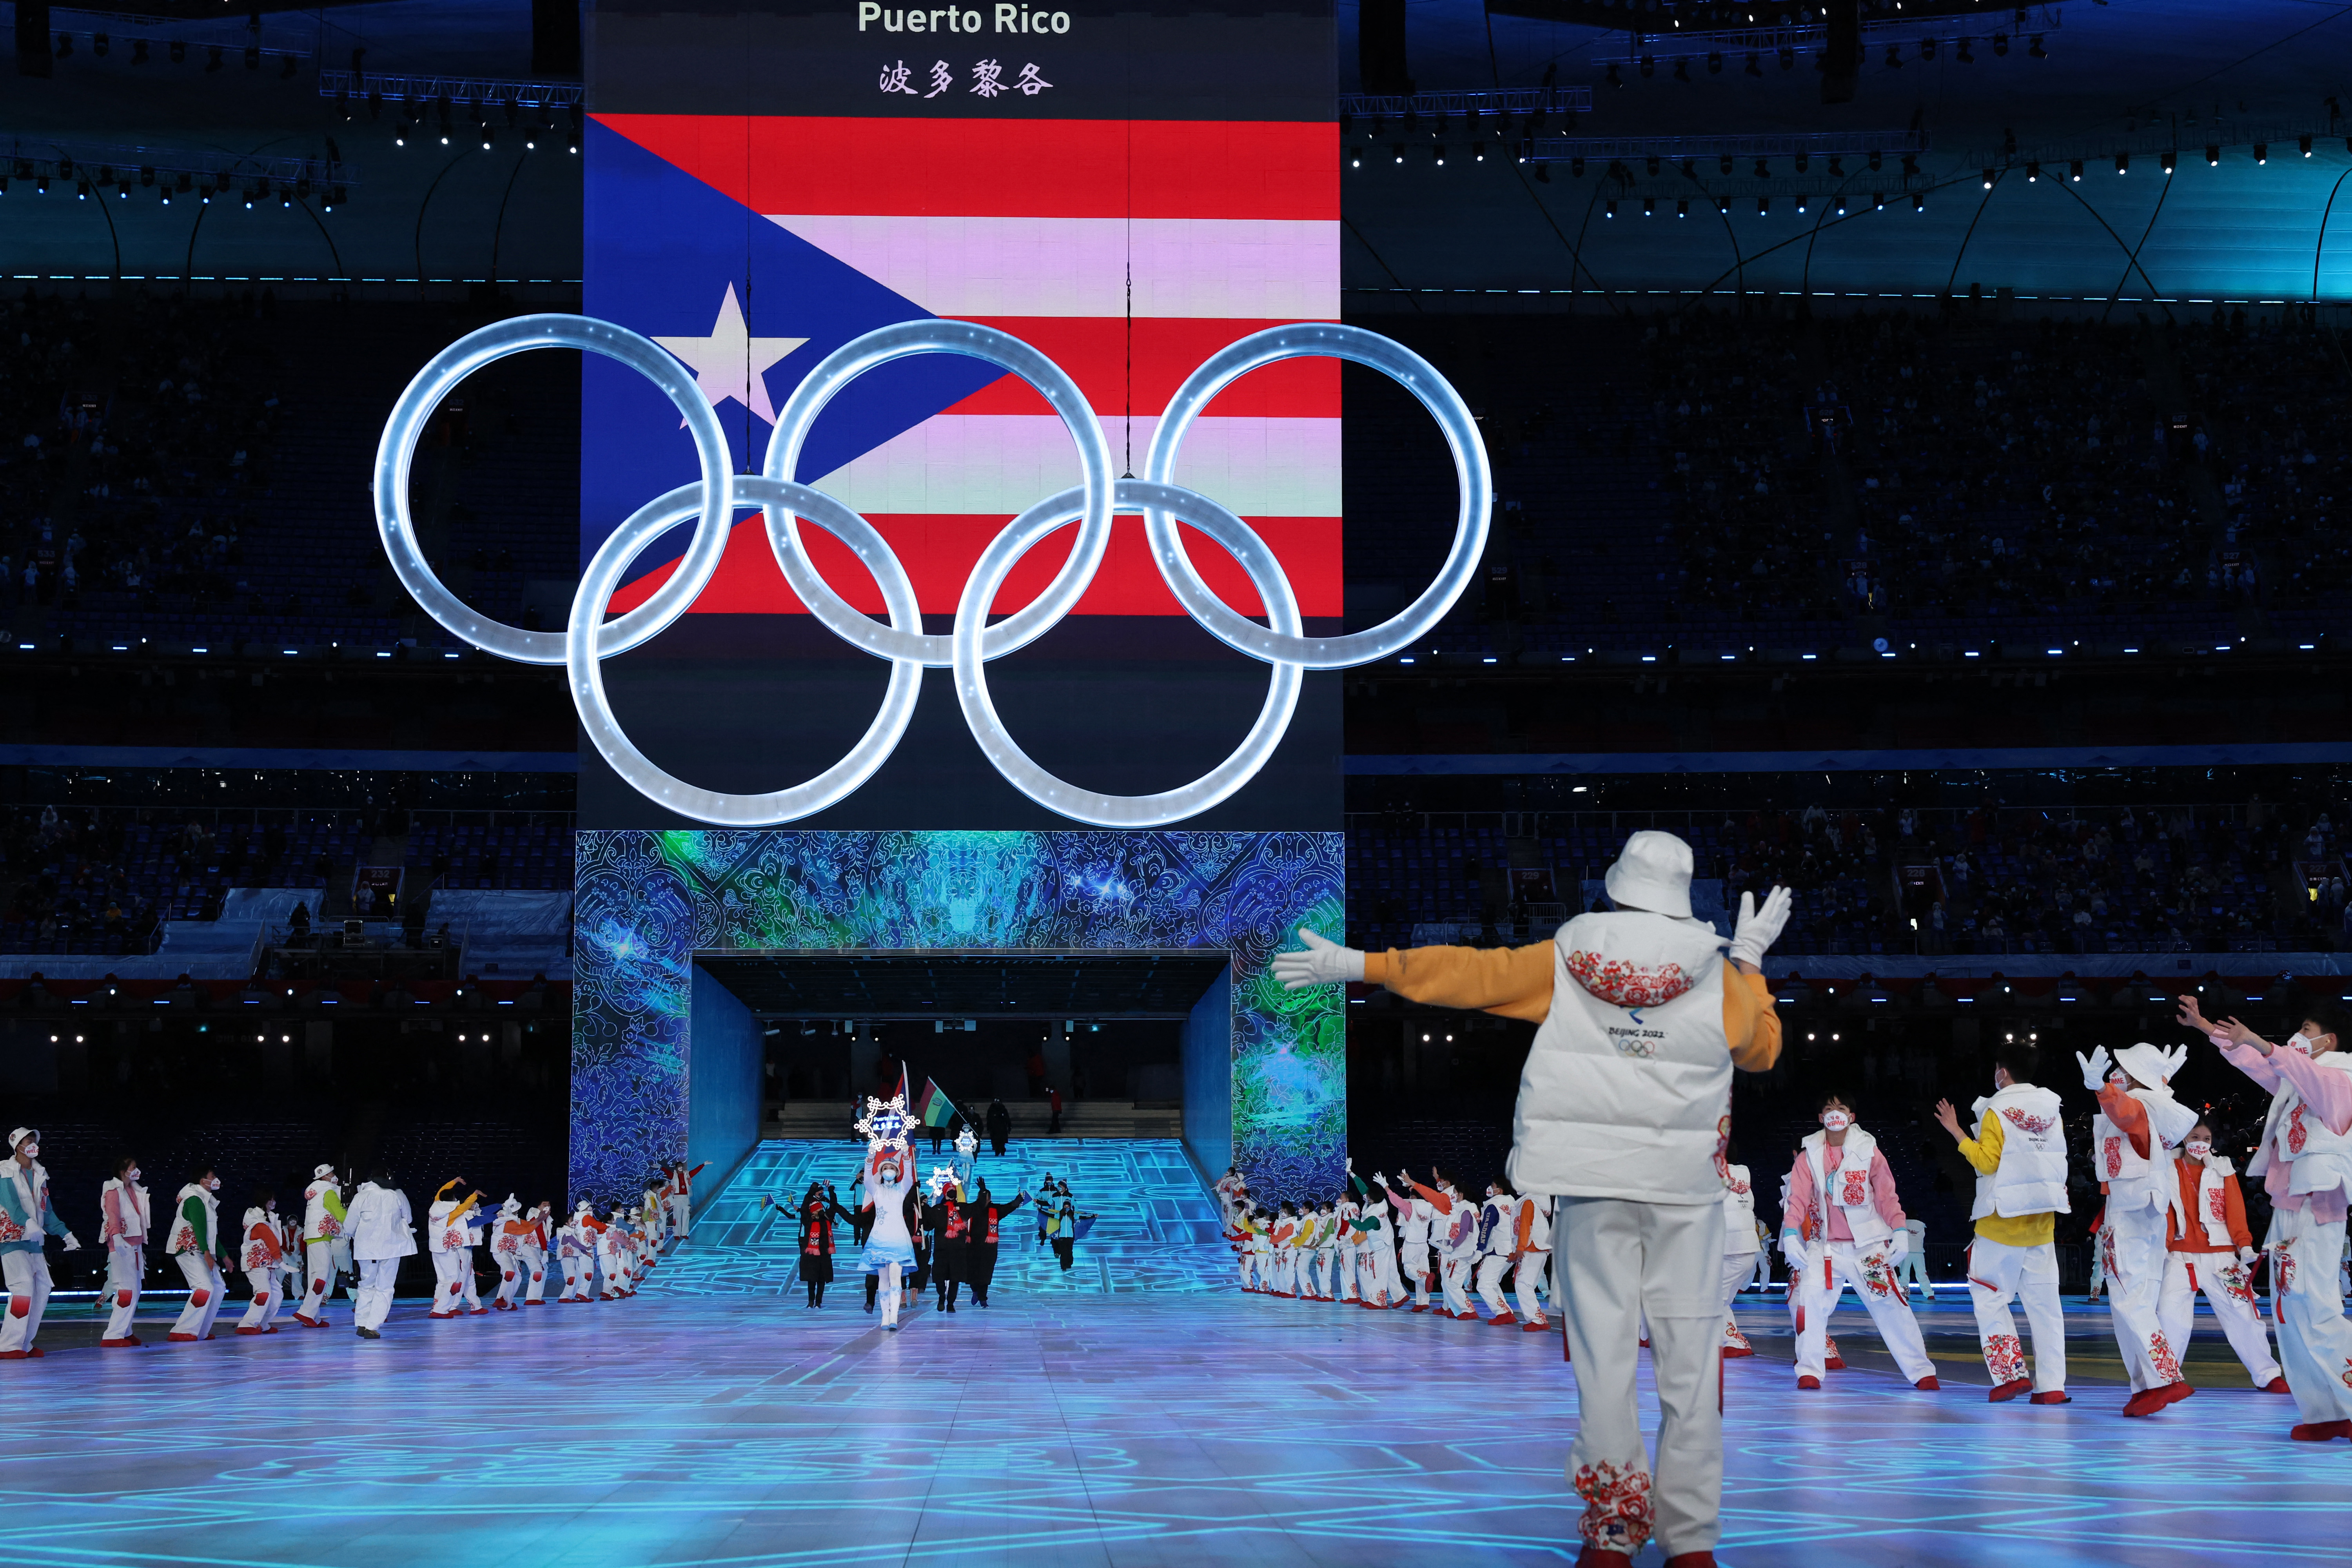 2022 Beijing Olympics - Opening Ceremony - National Stadium, Beijing, China - February 4, 2022. Puerto Rico athletes during the opening ceremony. REUTERS/Phil Noble